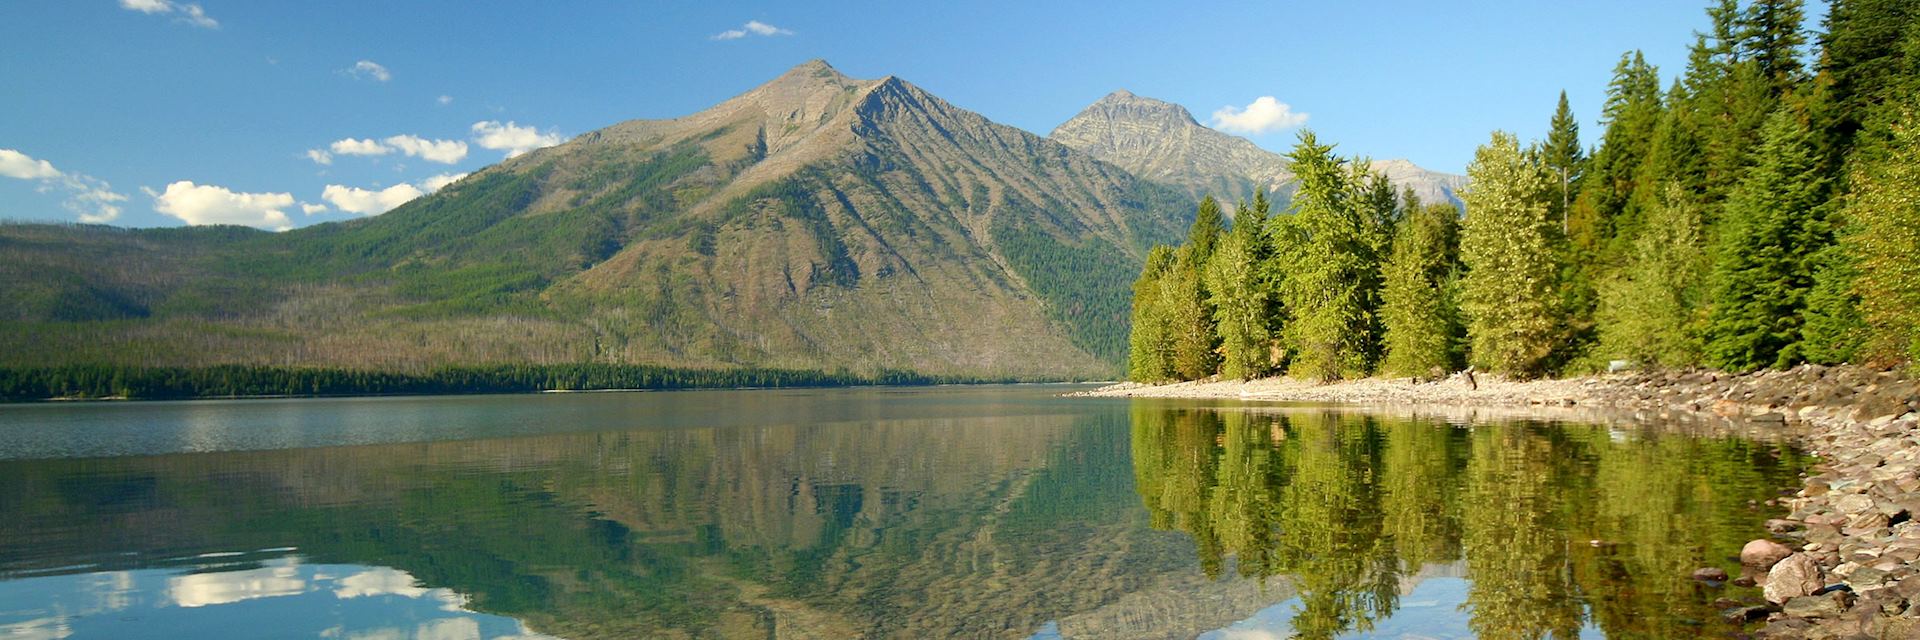 Lake McDonald, Glacier National Park